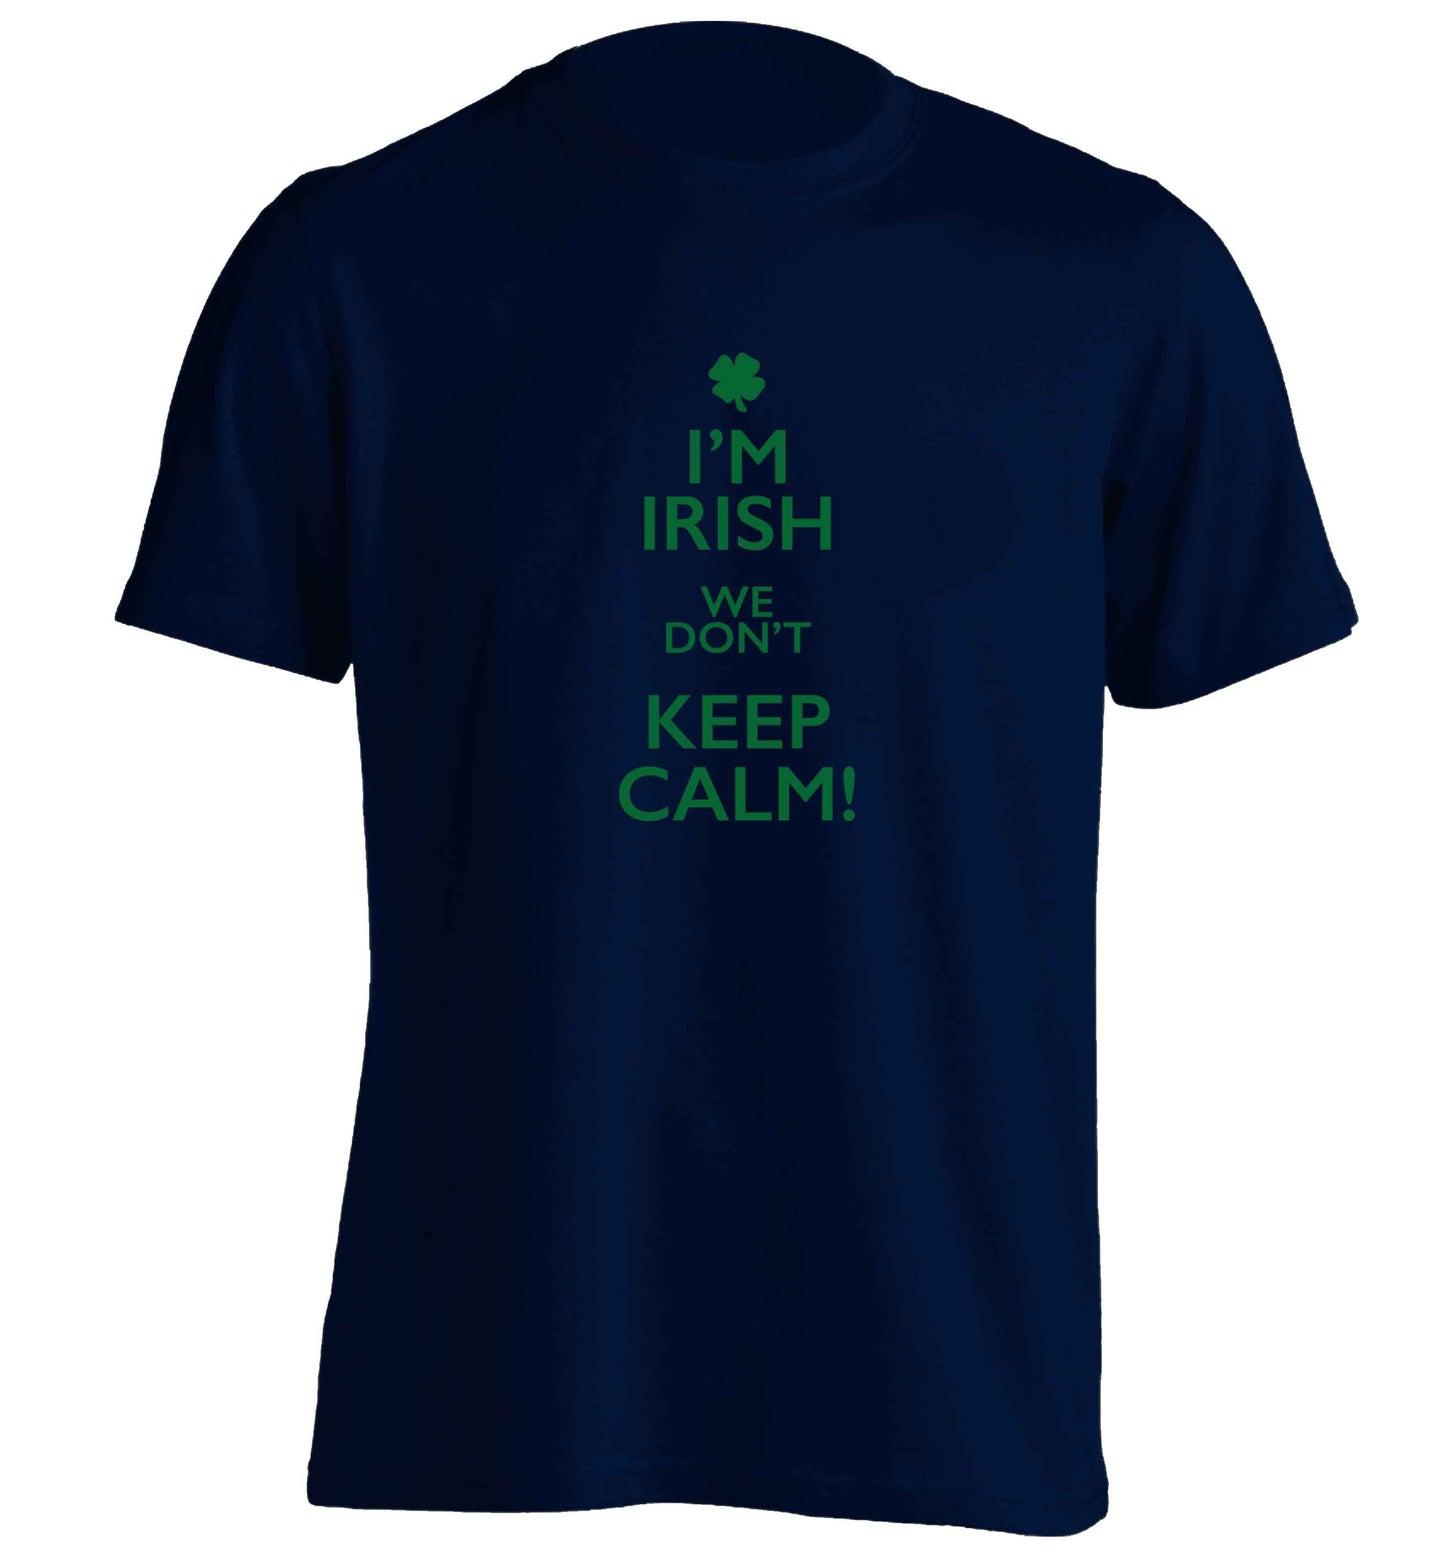 I'm Irish we don't keep calm adults unisex navy Tshirt 2XL